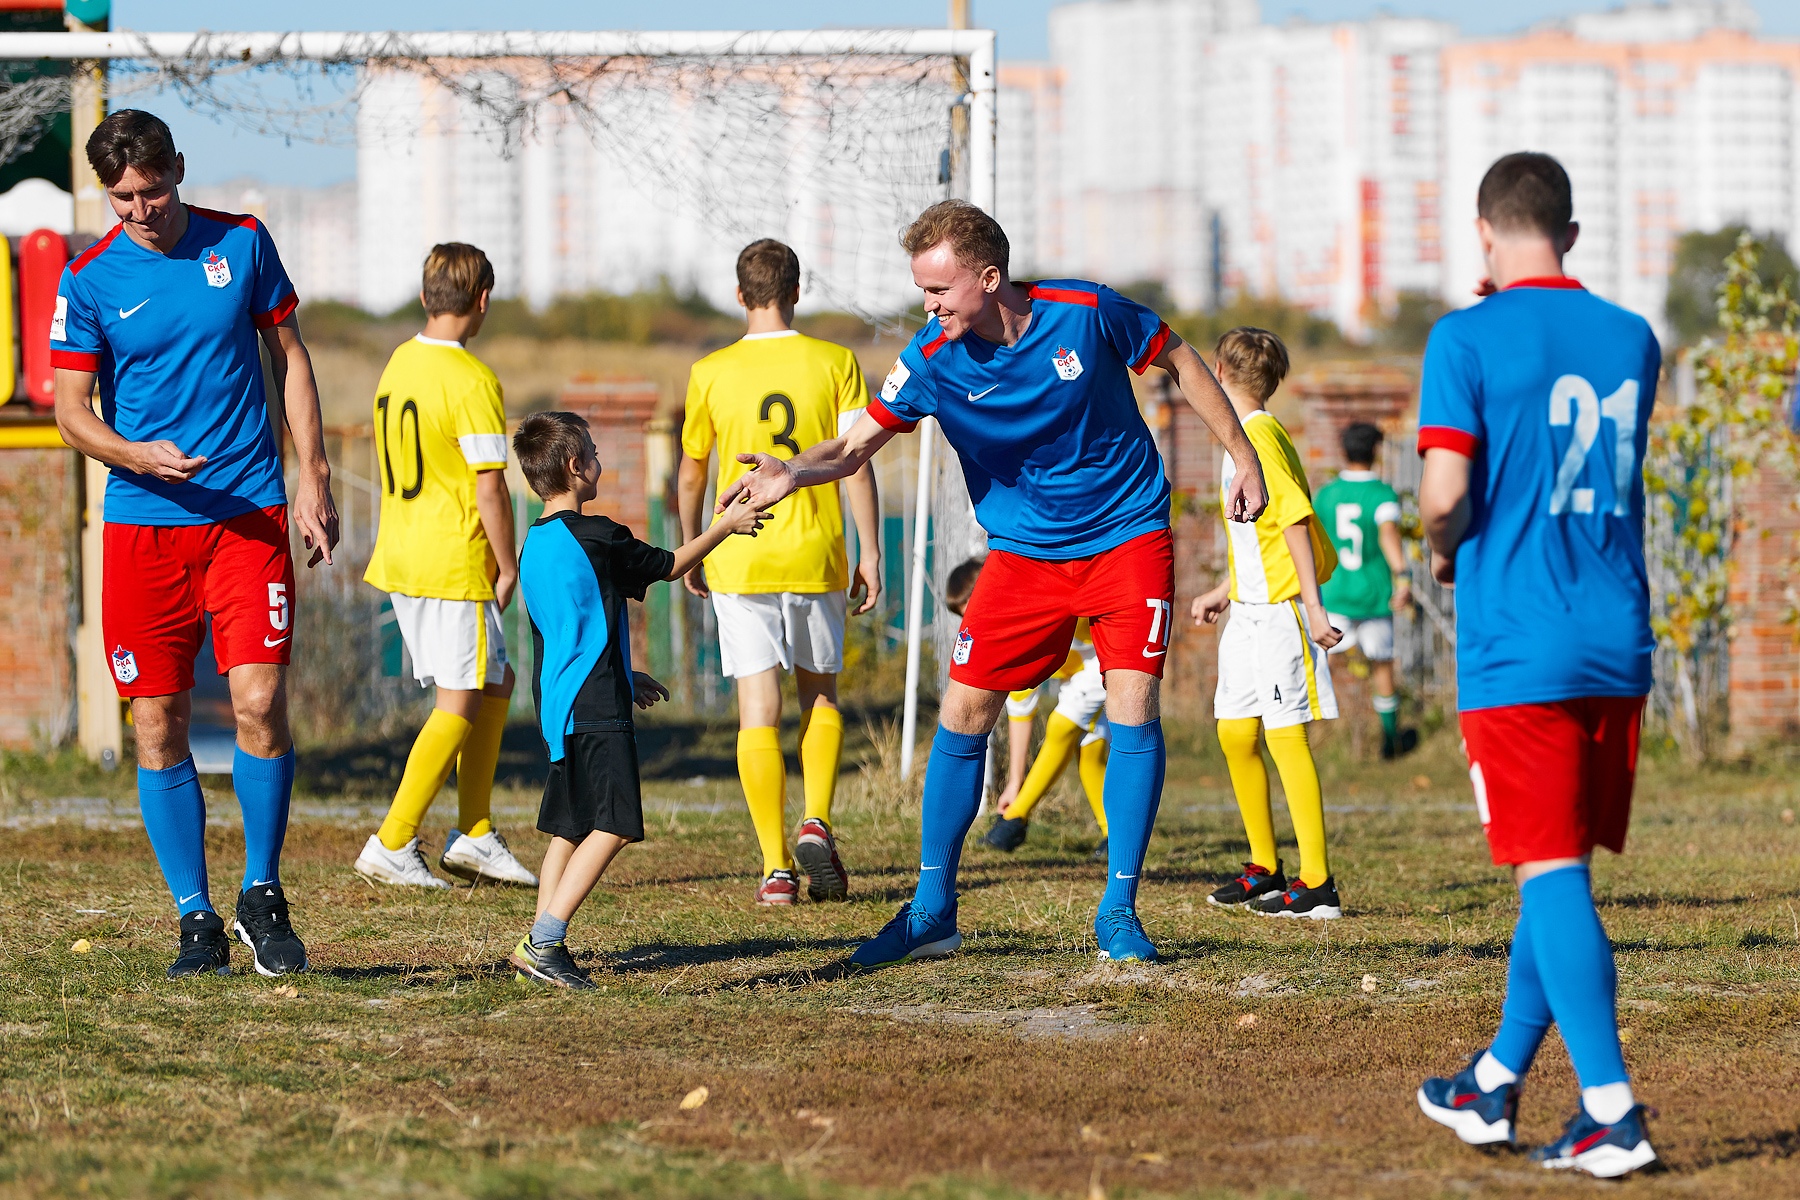 «Спорт важен нашим ребятам для социализации и реабилитации». 